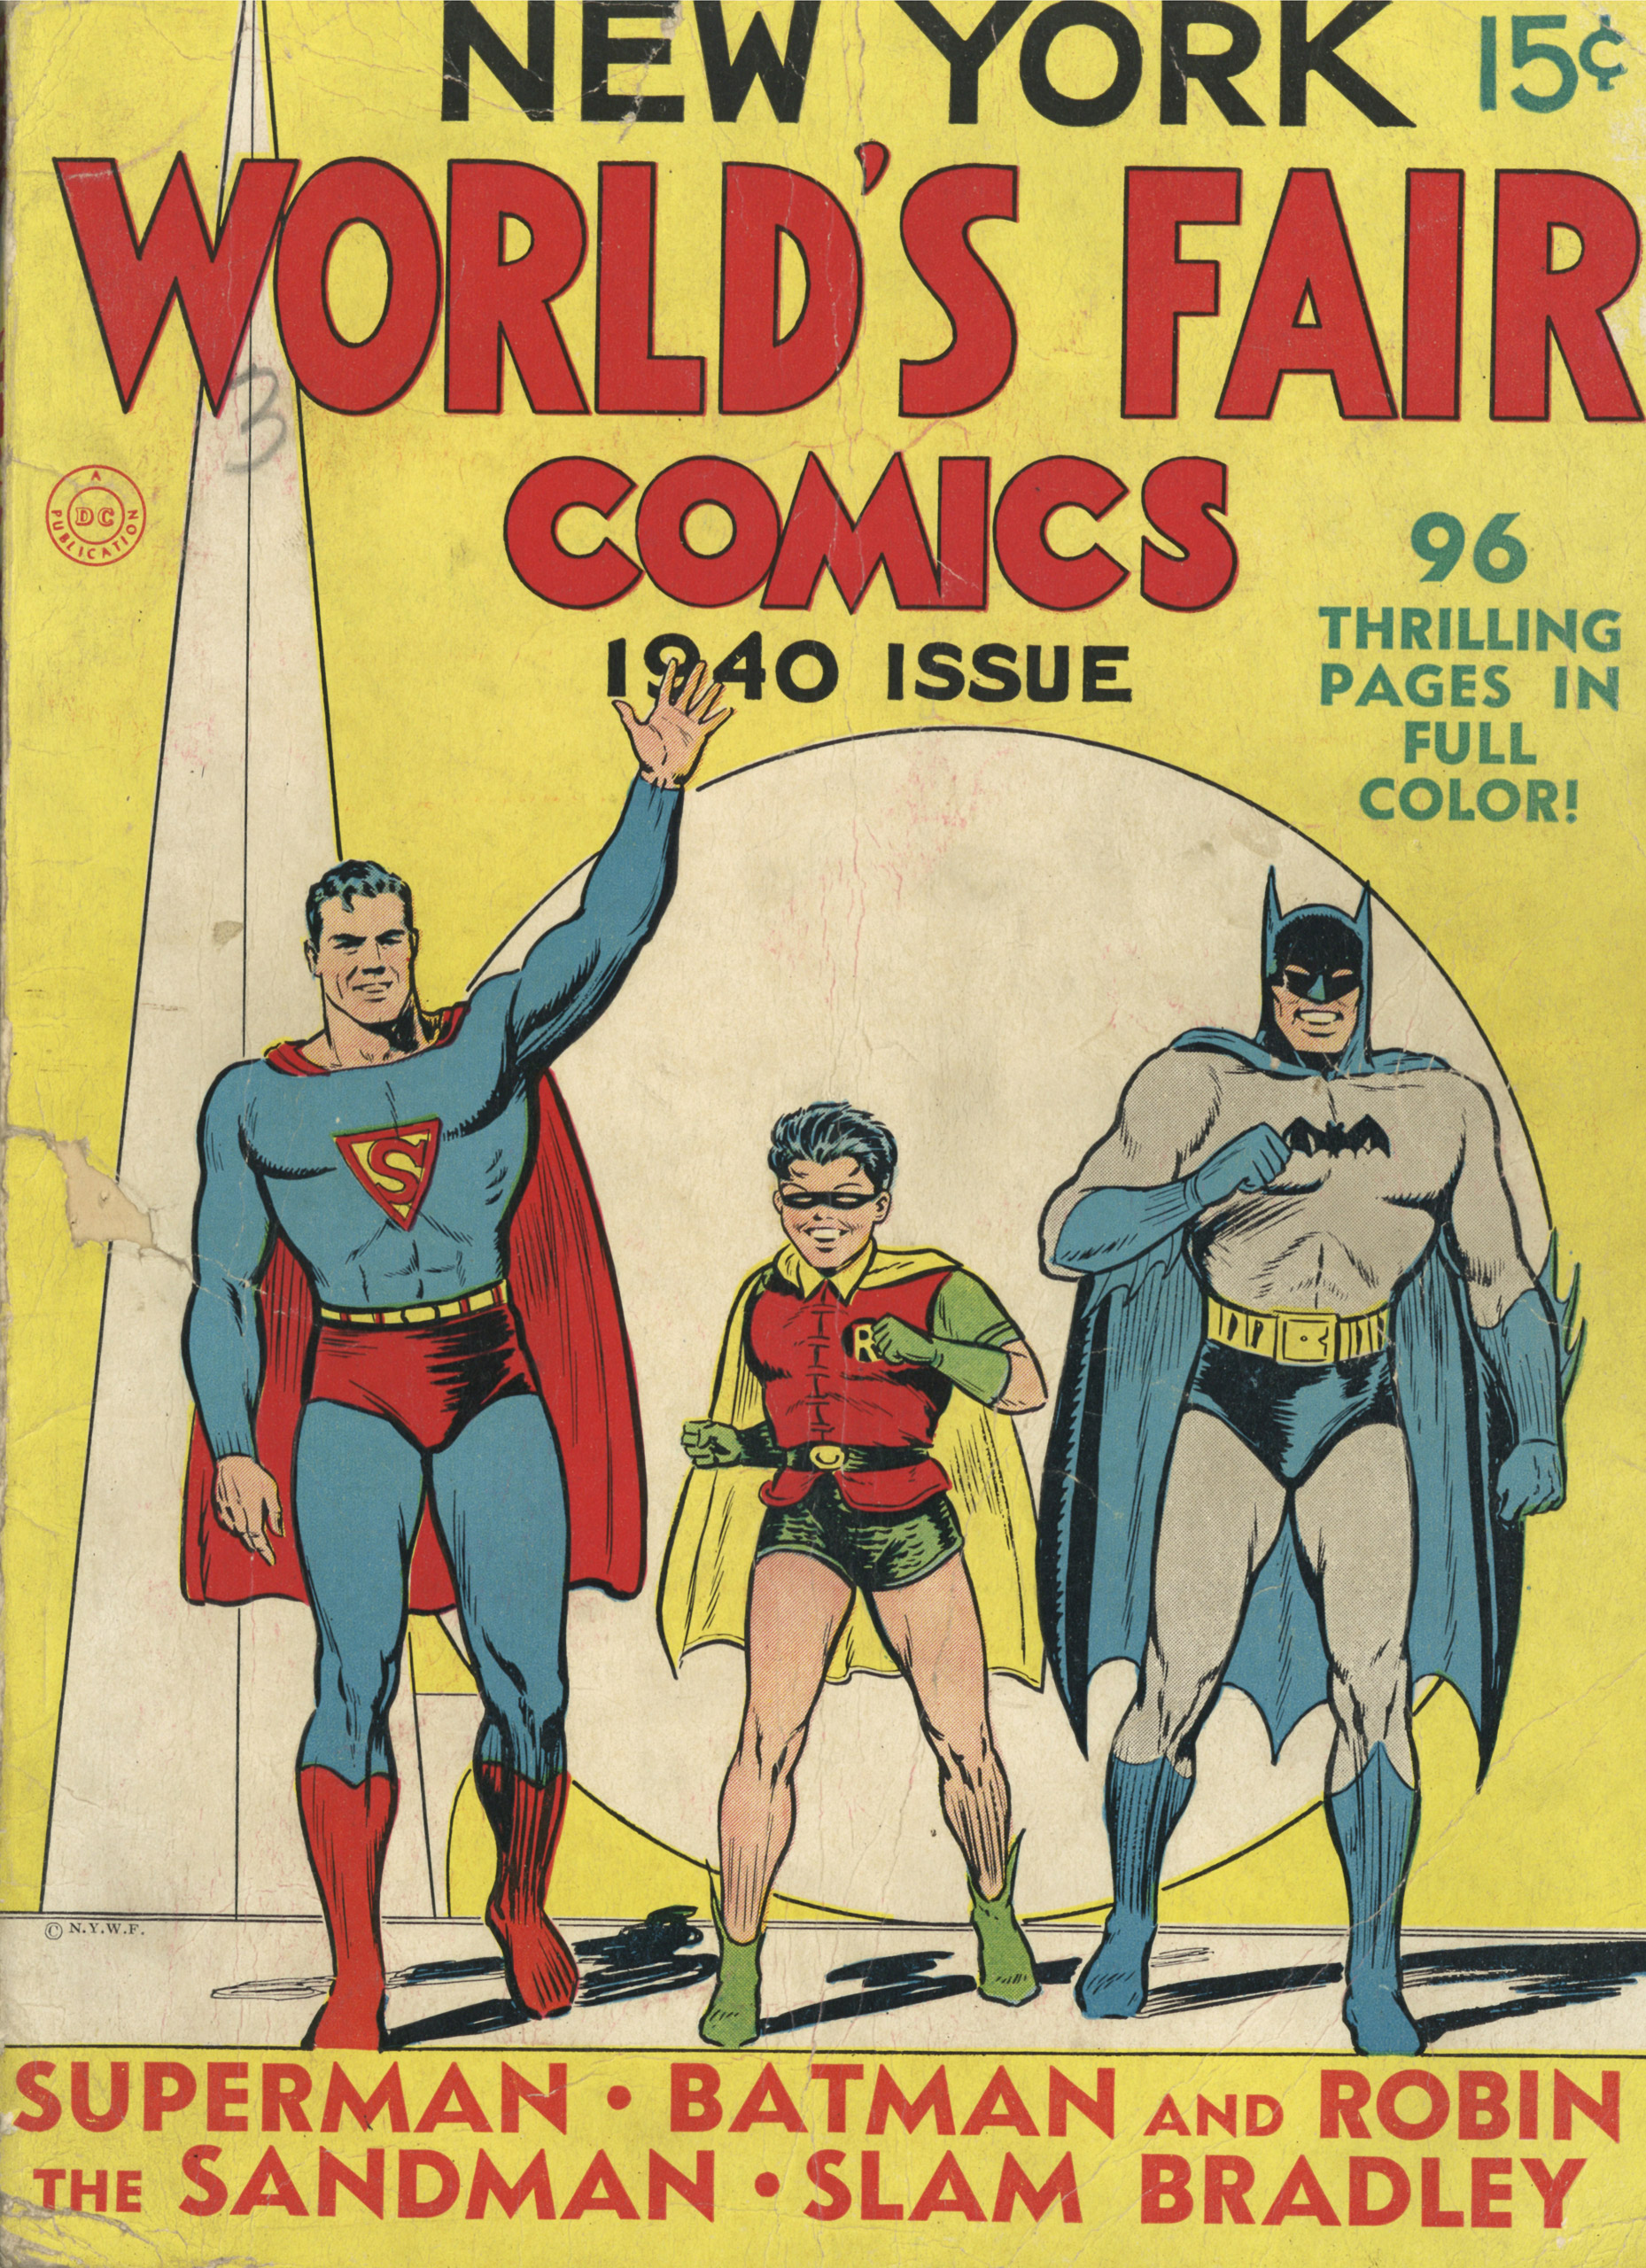 1940 New York World's Fair Comics cover with Batman.